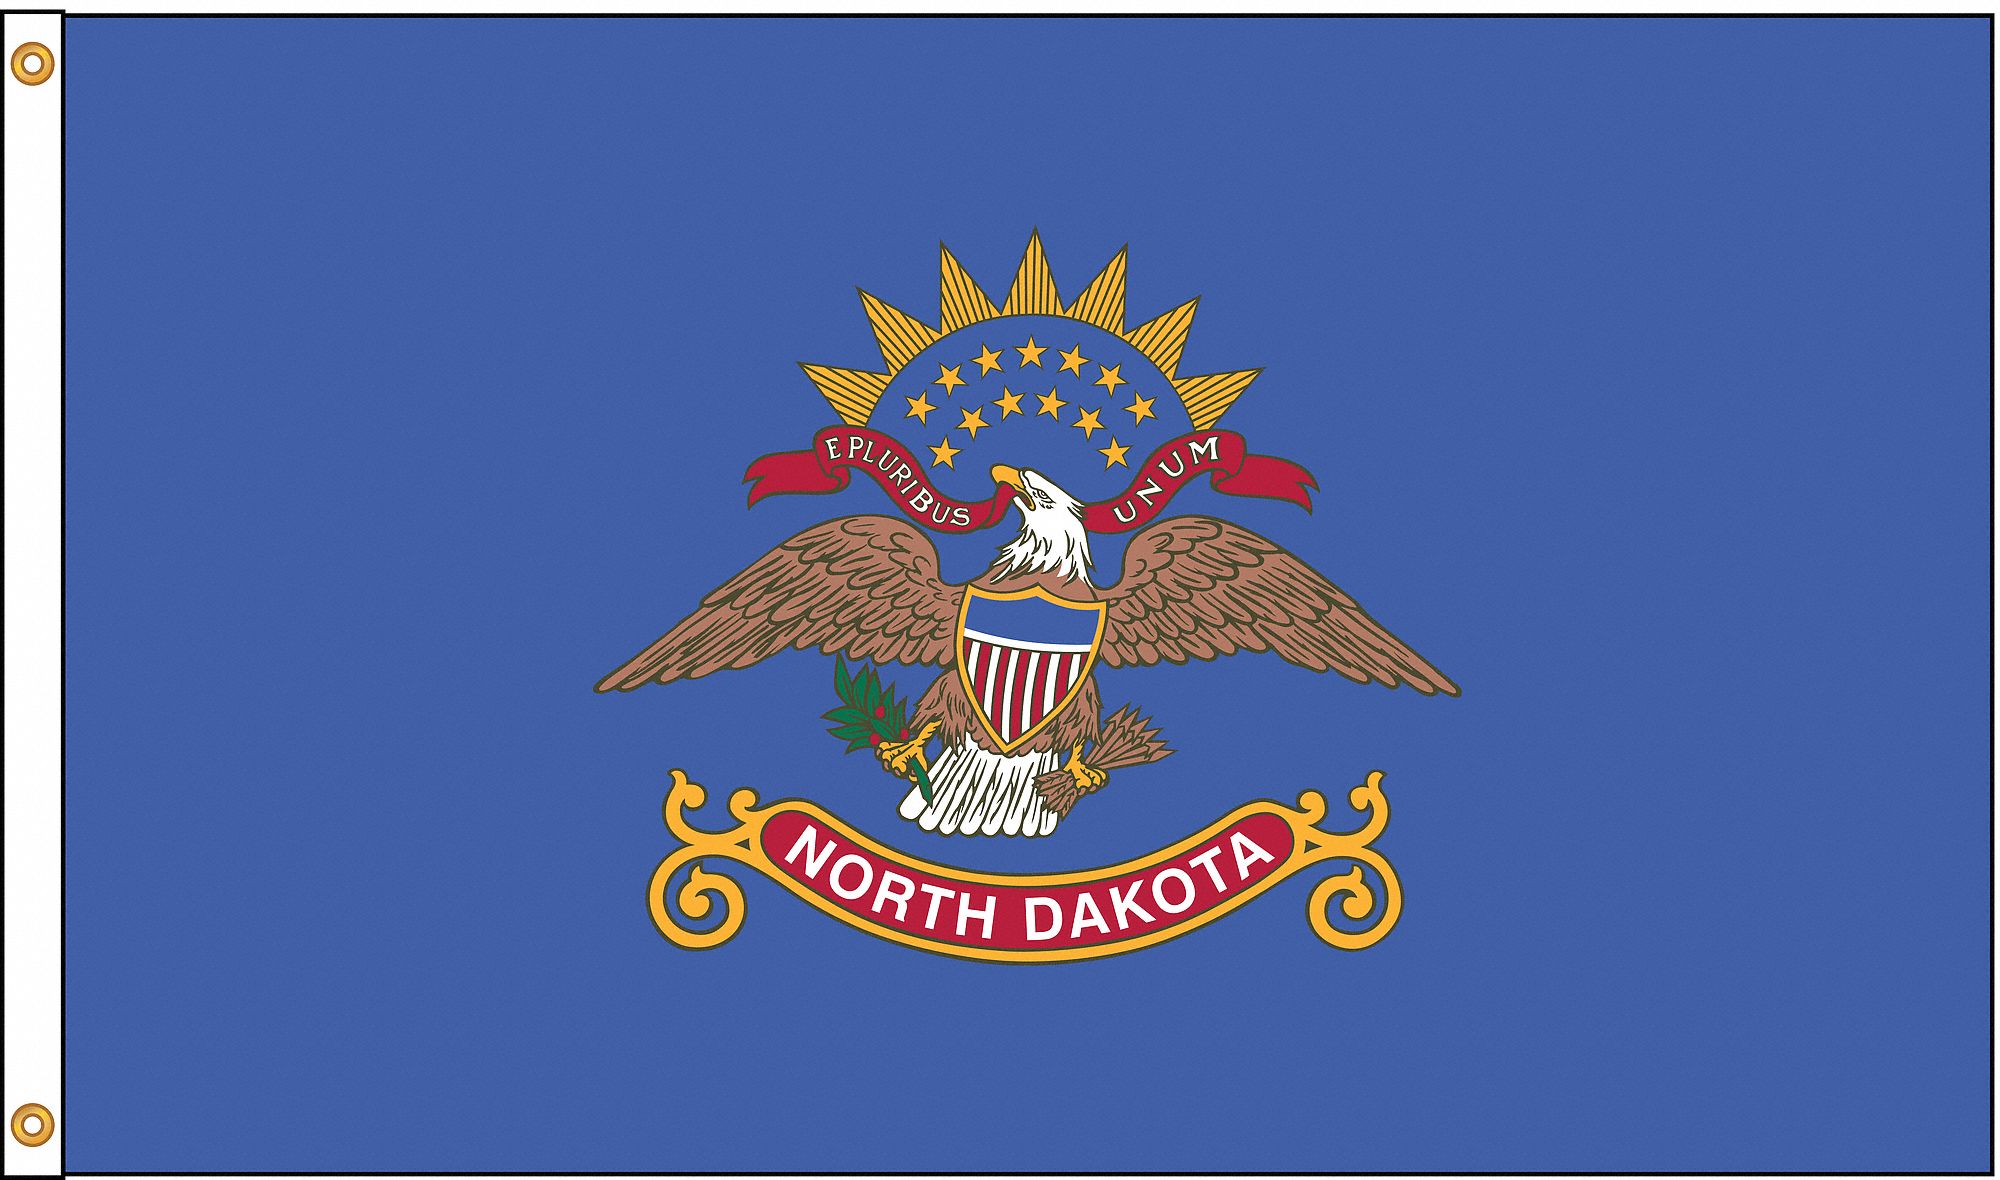 State of North Dakota employee discounts